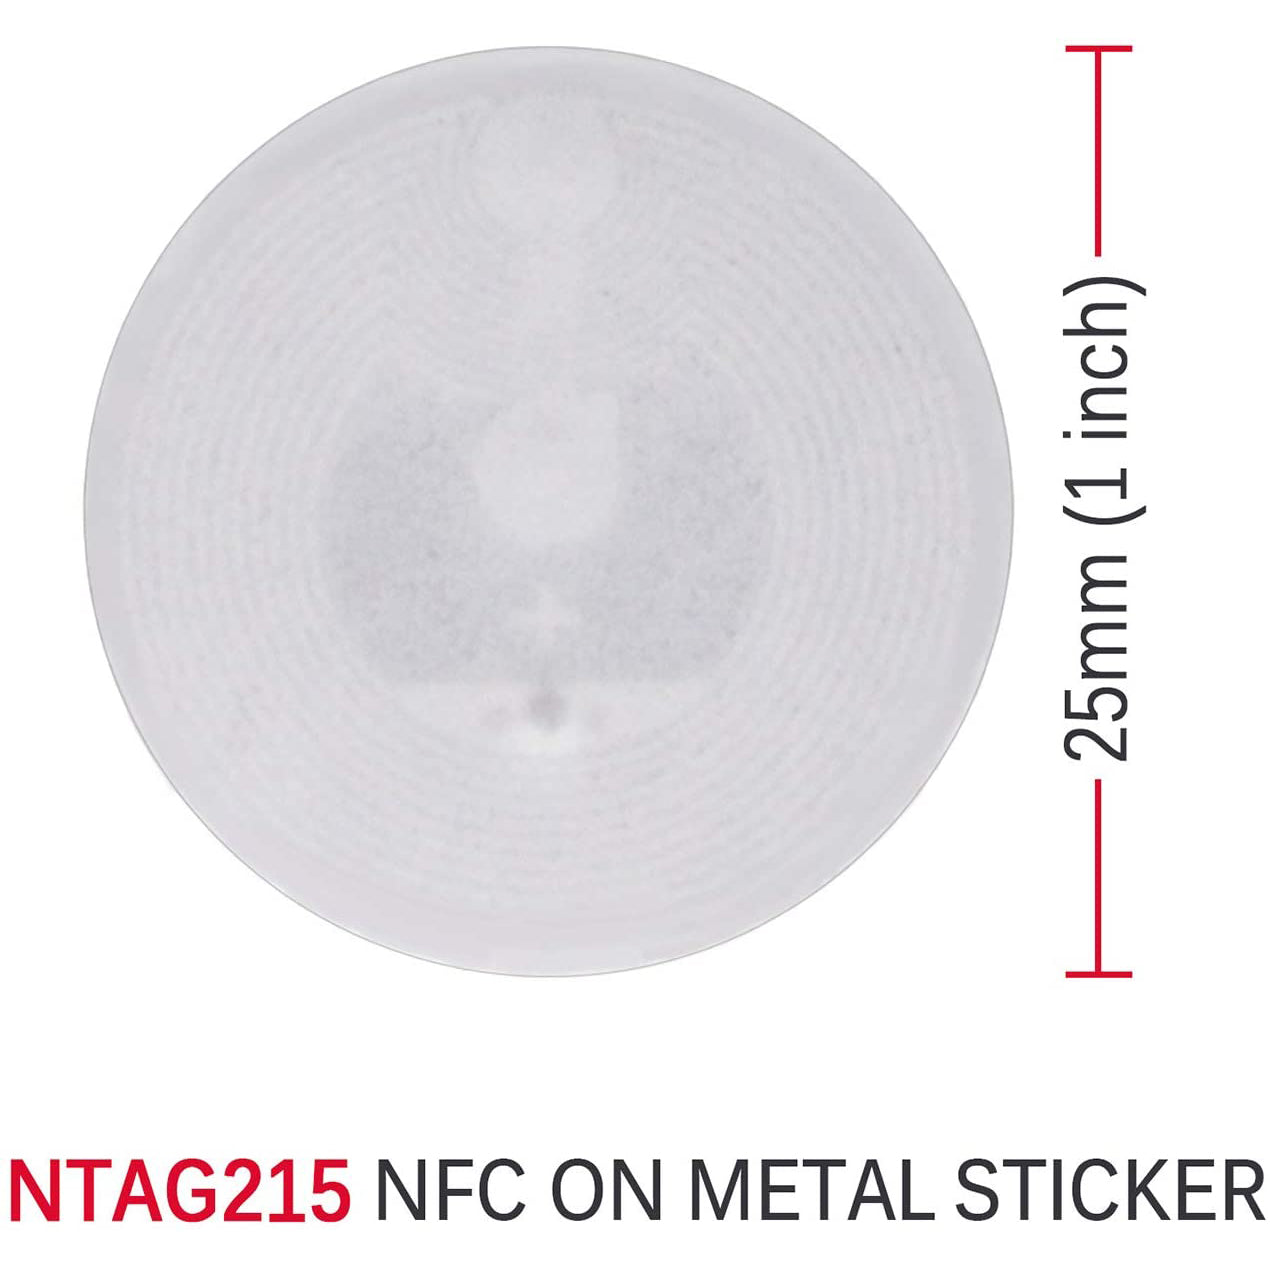 K Lakey 10pcs NFC Anti Metal Sticker,Round NFC Tags Sticker,NTAG215 NFC Stickers,Black Anti Metal NFC Tag Sticker,NFC Tags for Metal 504 Byte NFC Tag Anti